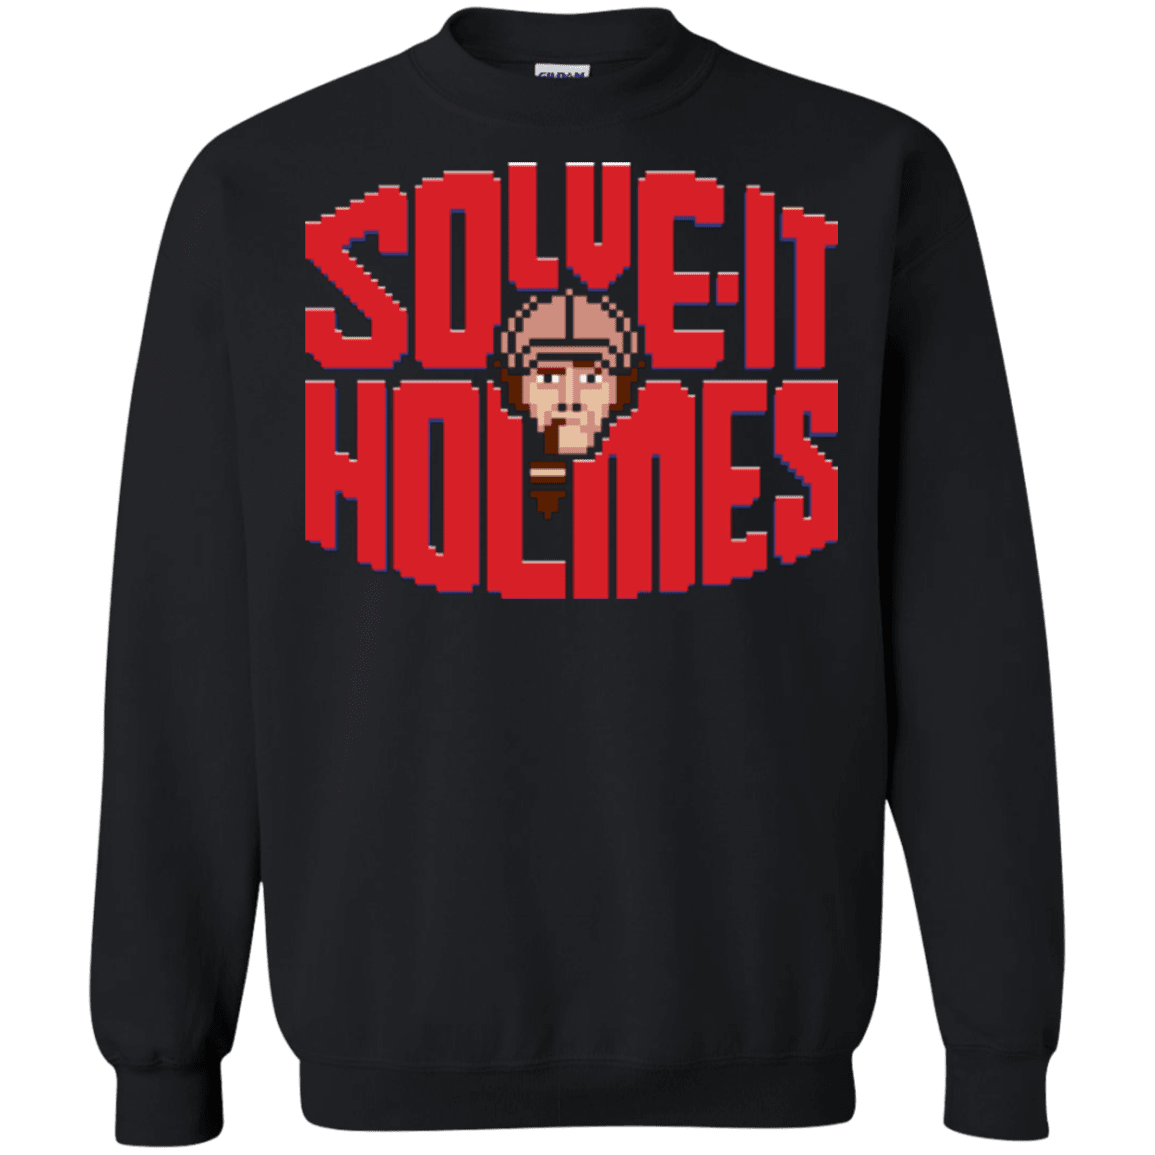 Sweatshirts Black / Small Solve It Holmes Crewneck Sweatshirt